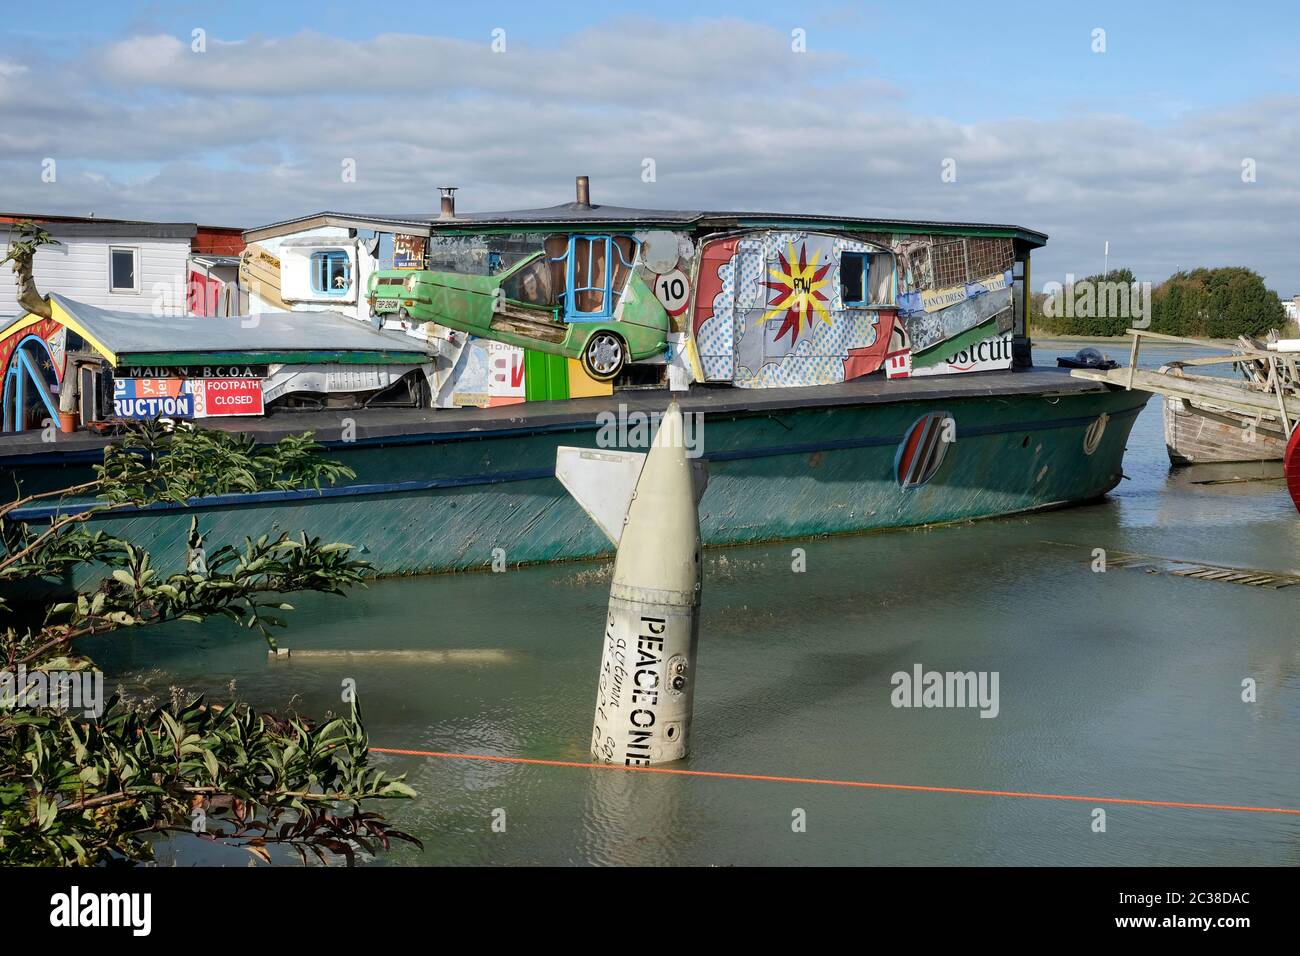 Houseboats at Riverbank on the River Adur, Shoreham, Brighton Stock Photo